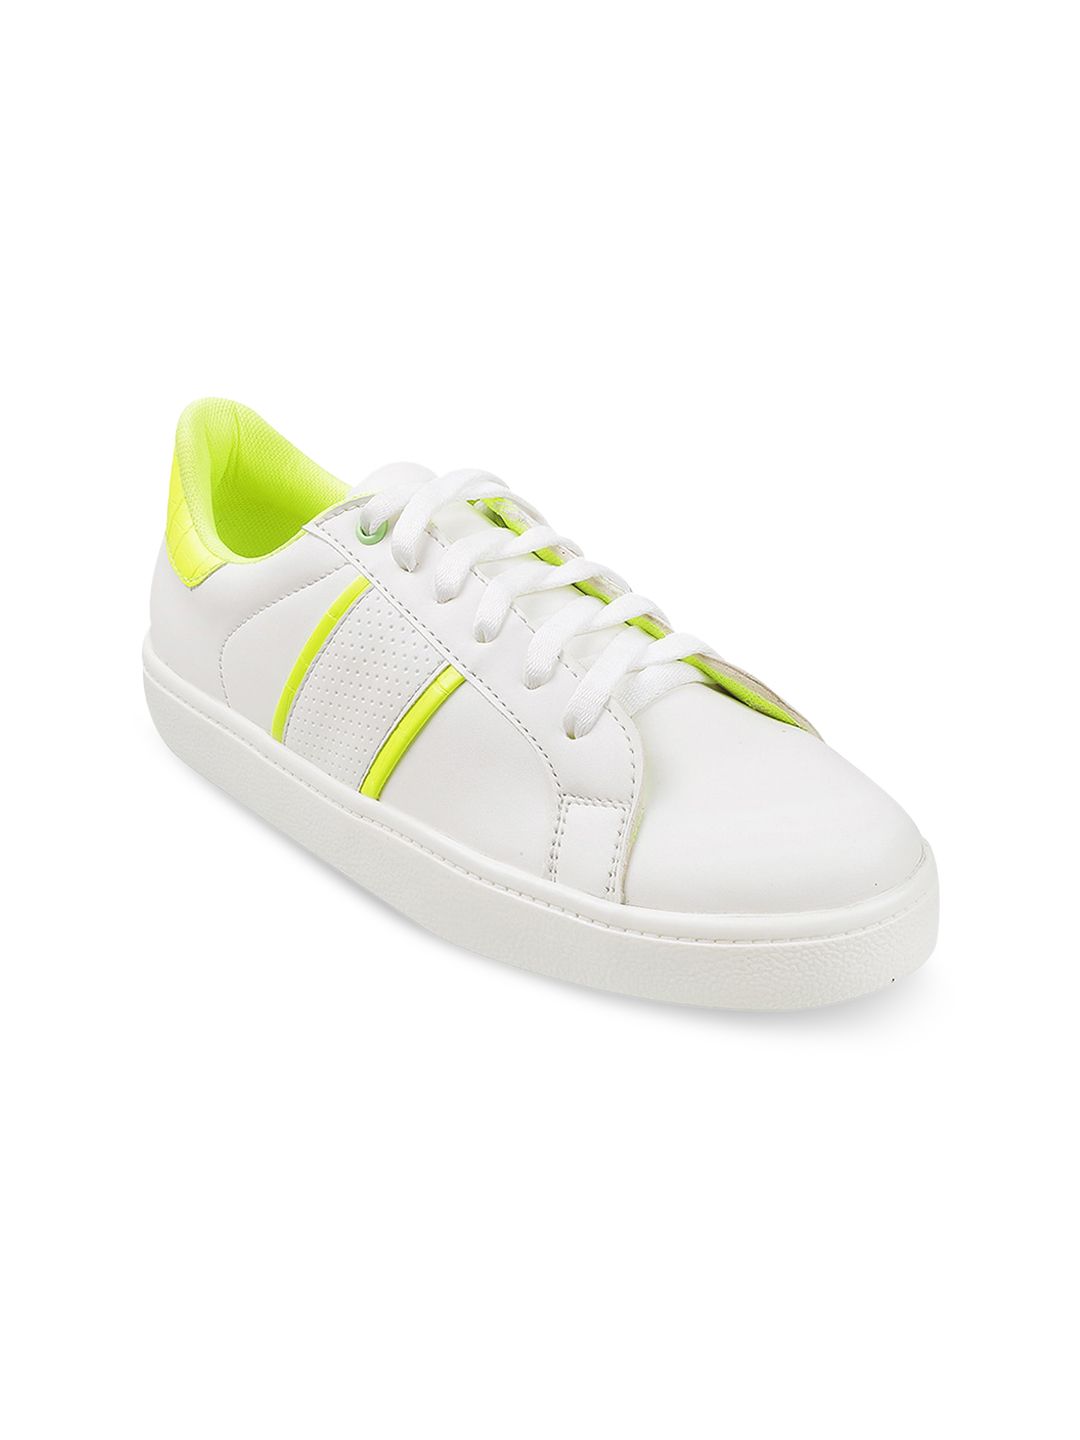 Mochi Women Fluorescent Green & White Casual Sneakers Price in India